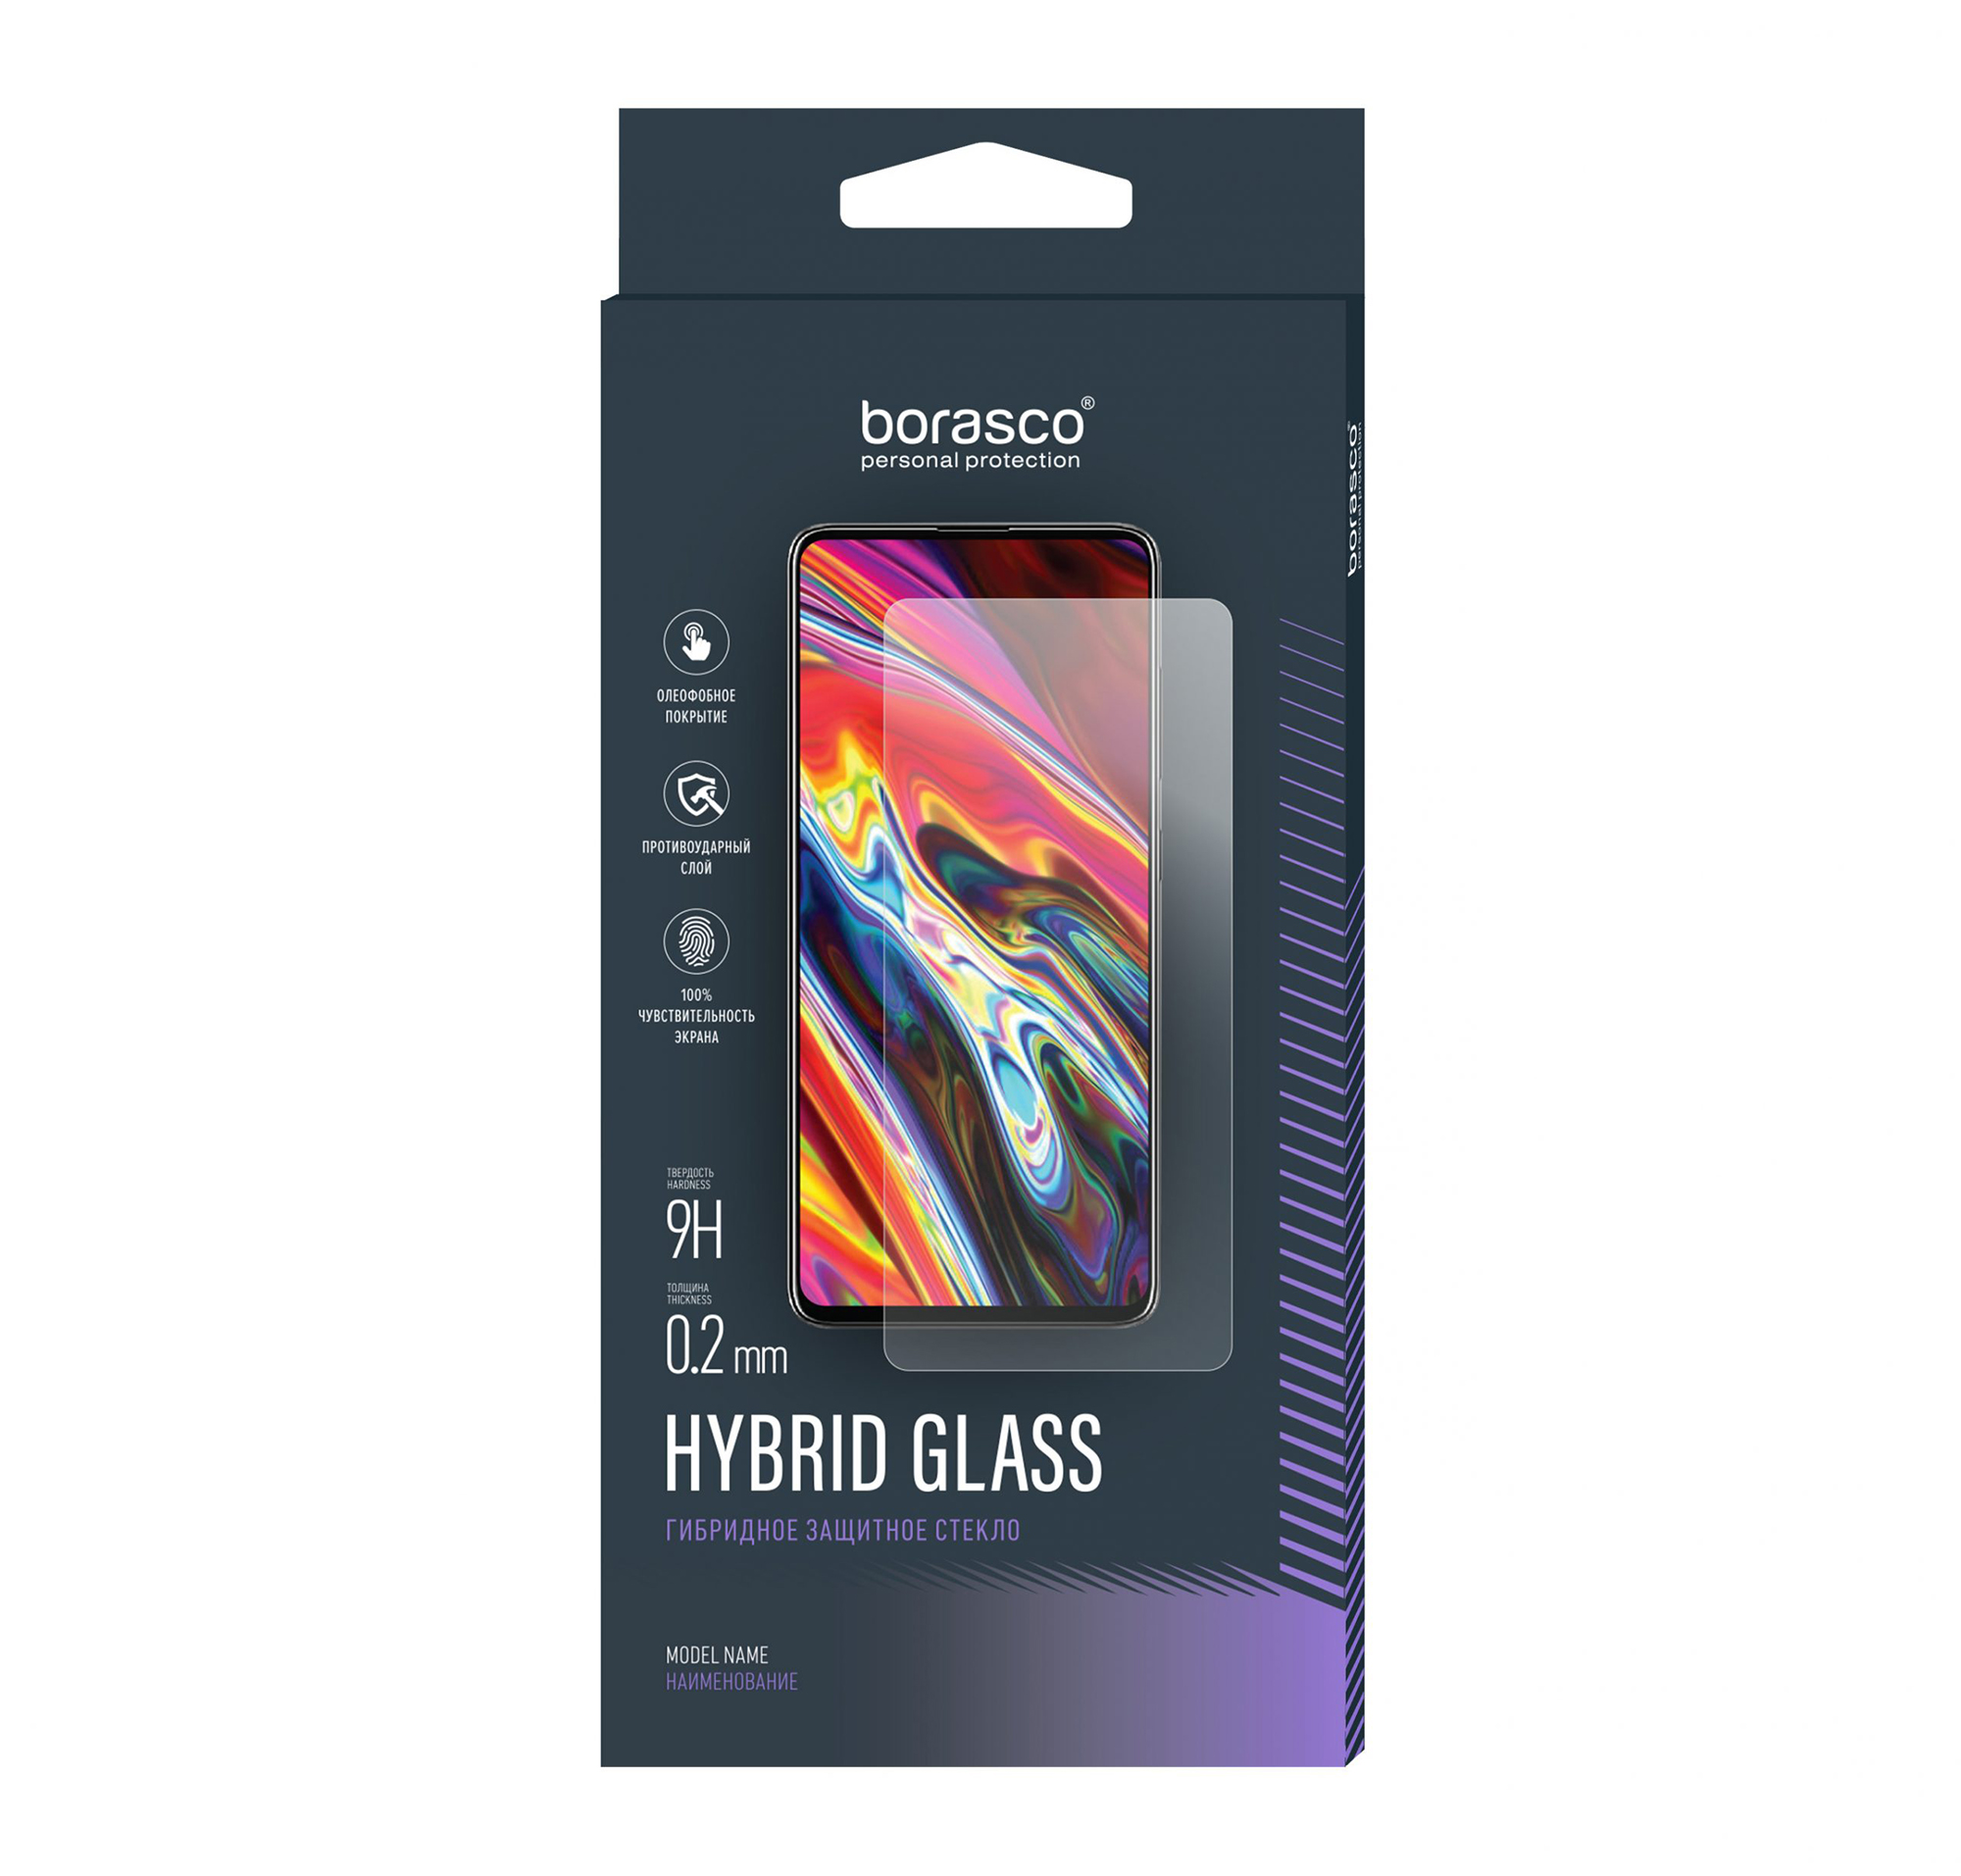 Защитное стекло Hybrid Glass для Samsung Galaxy XCover 4S пленка защитная гидрогелевая krutoff для samsung galaxy xcover 4s задняя сторона старая стена